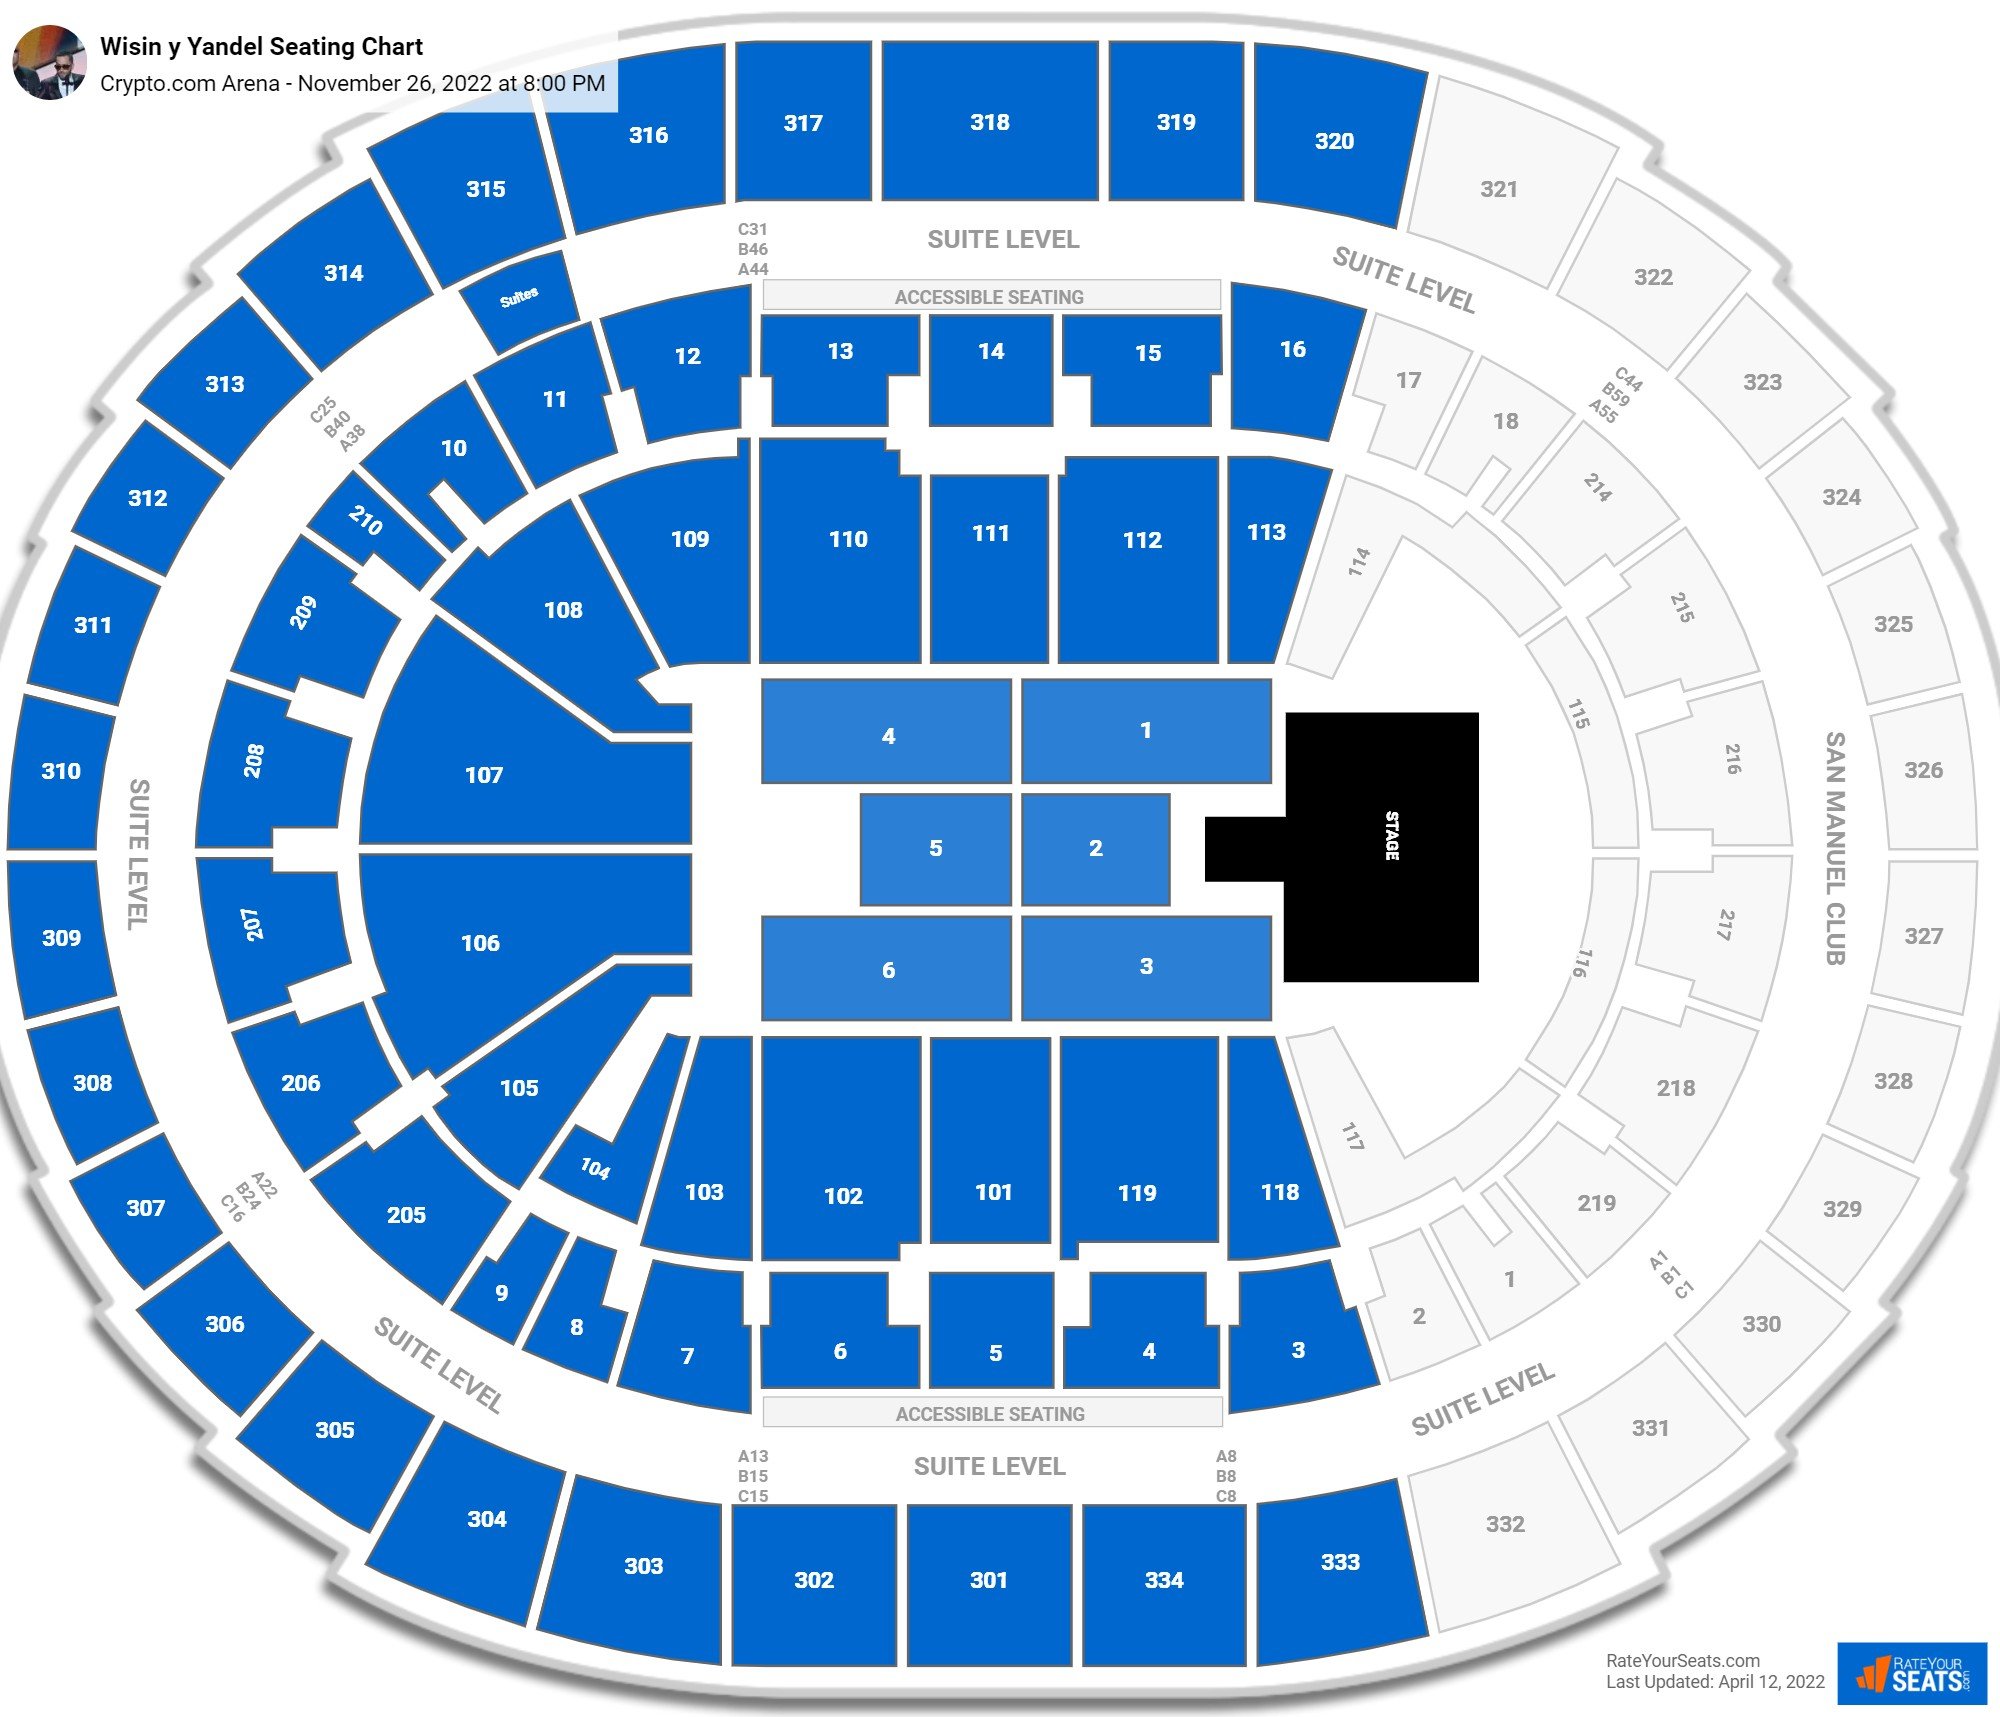 Crypto com Arena Concert Seating Chart RateYourSeats com